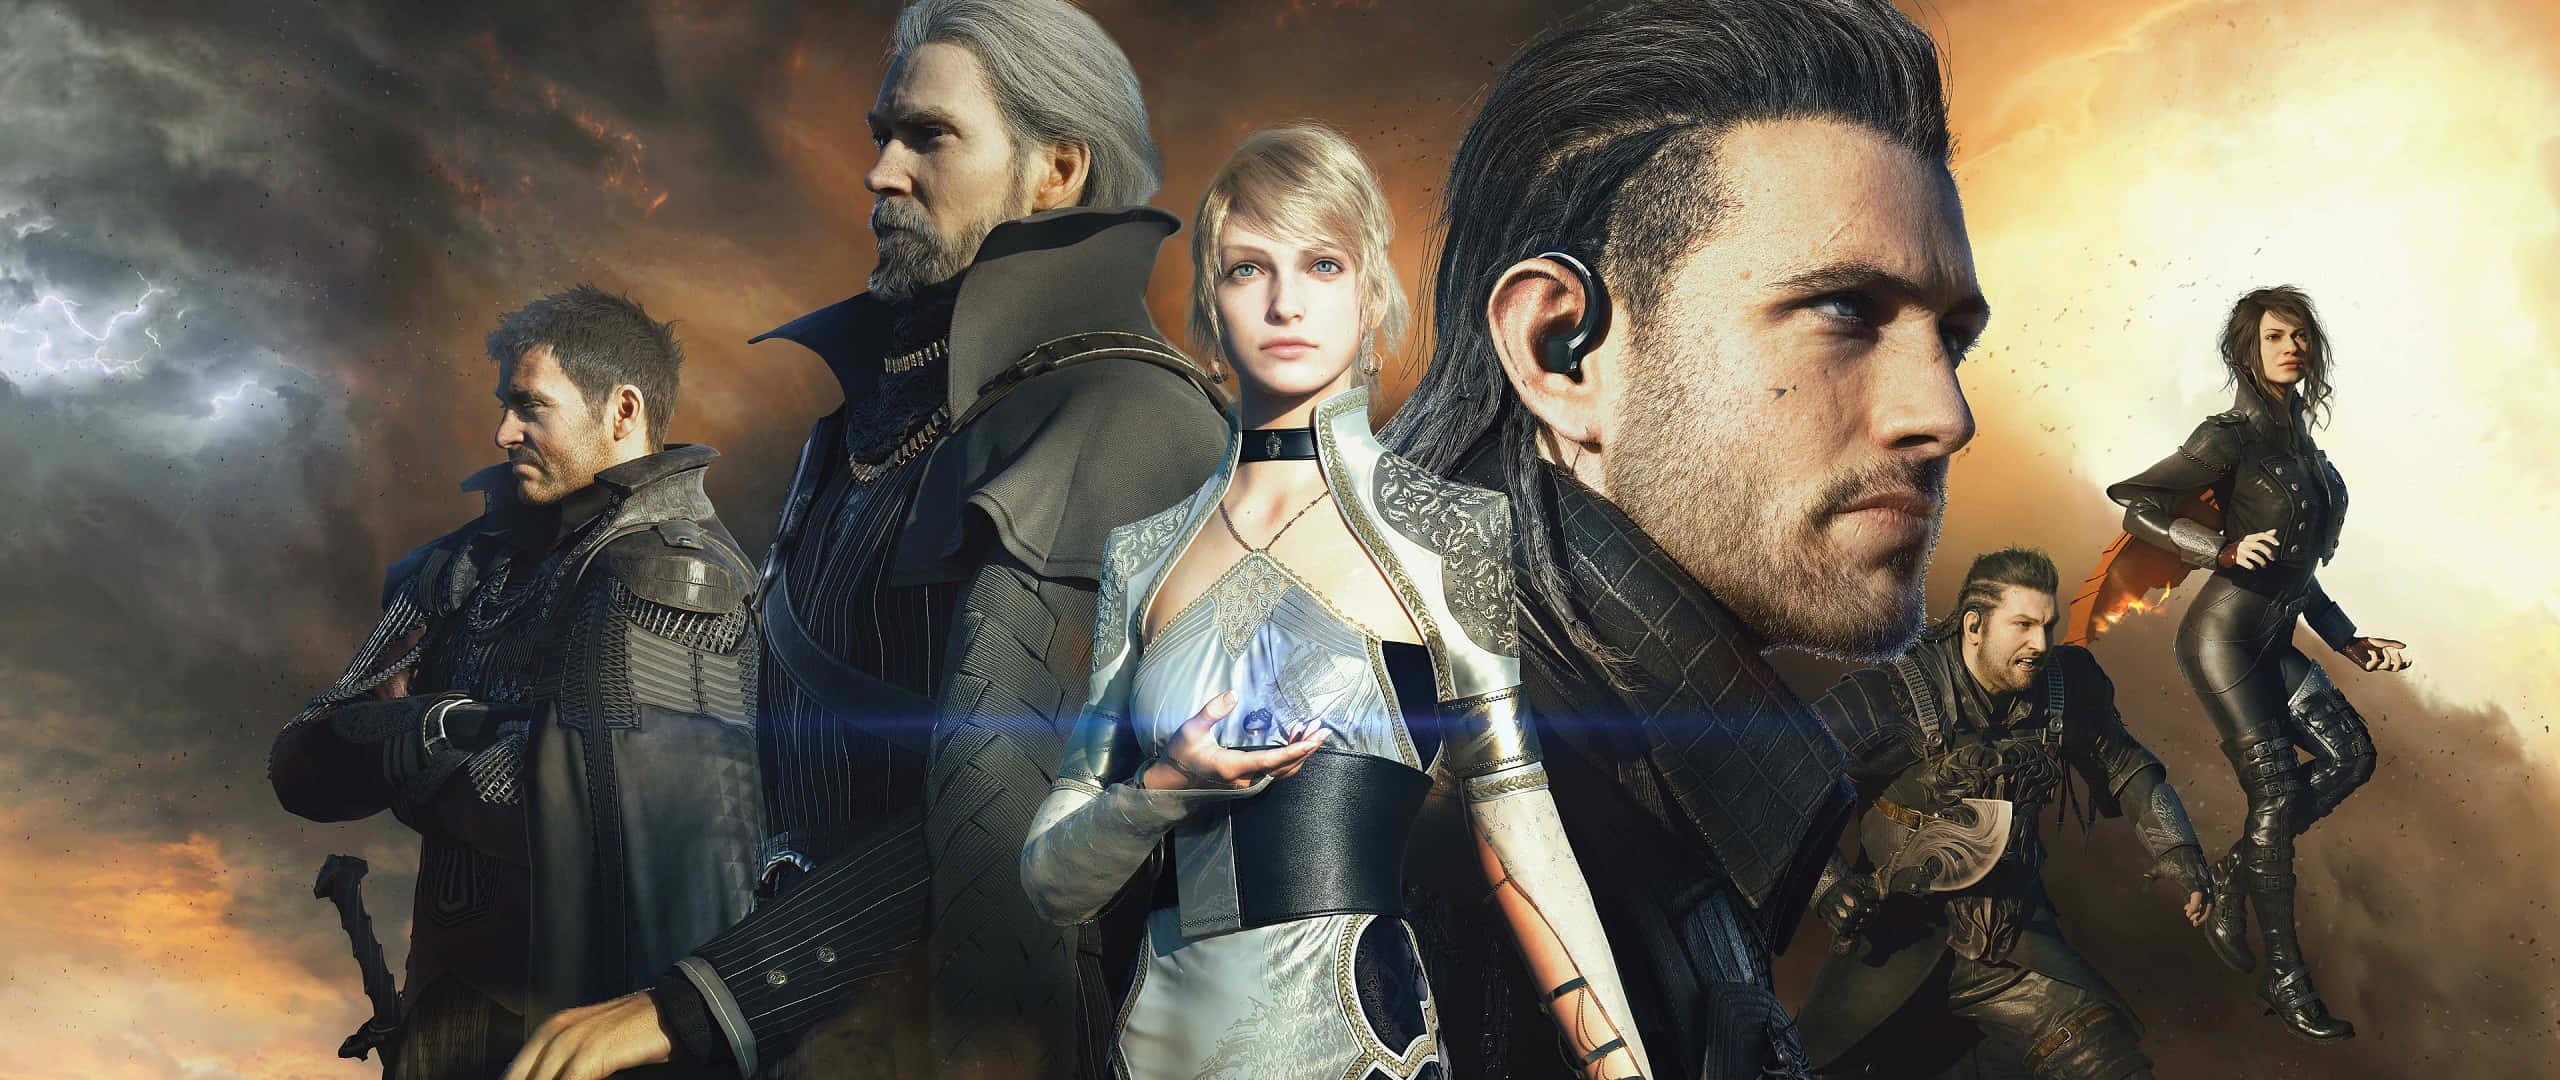 Final Fantasy Xv Main Characters Background